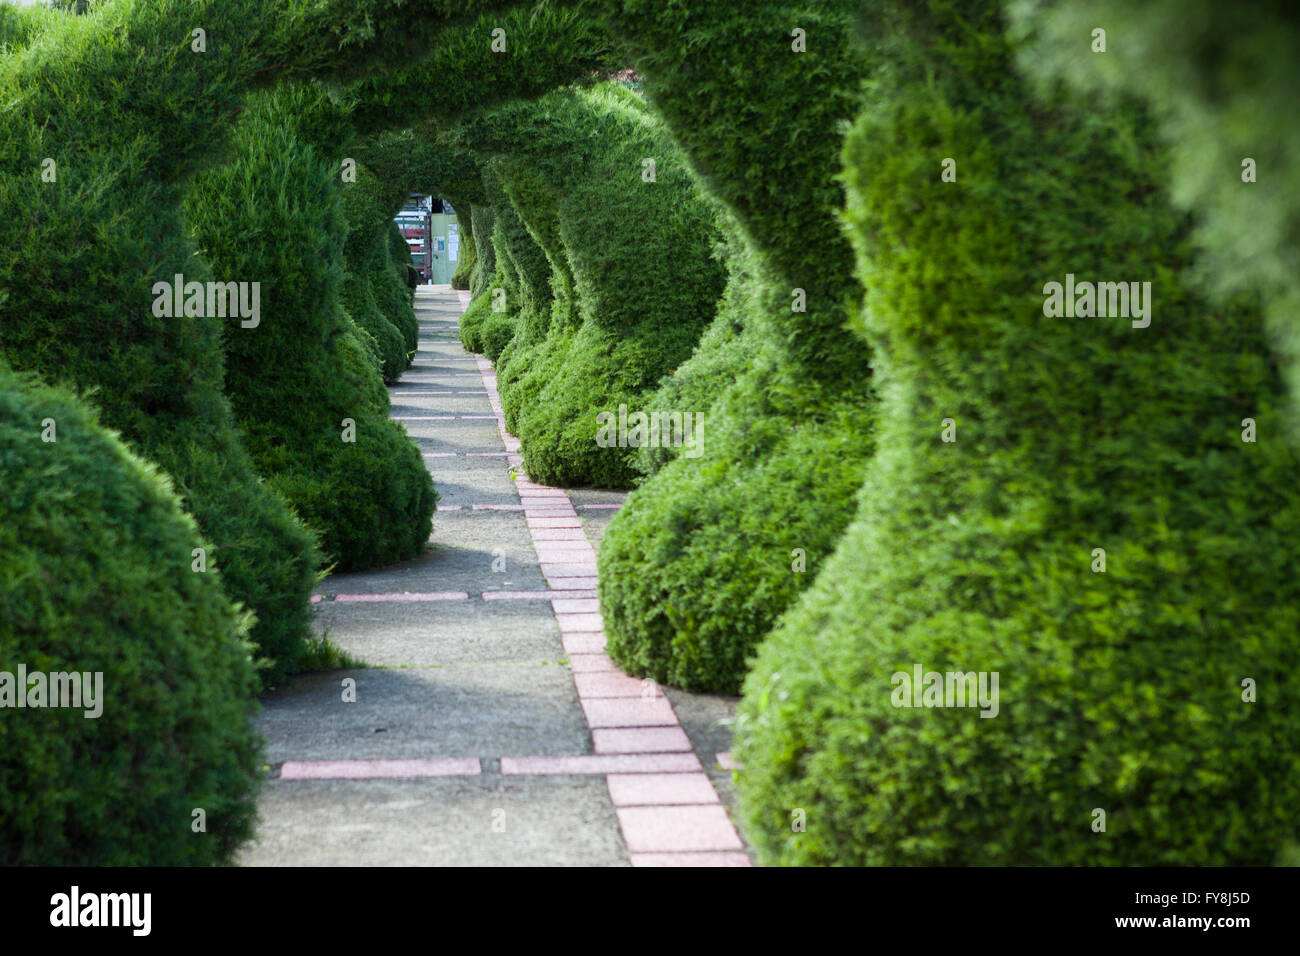 The Francisco Alvardo Park with its famous topiary in Zarcero, Costa Rica Stock Photo